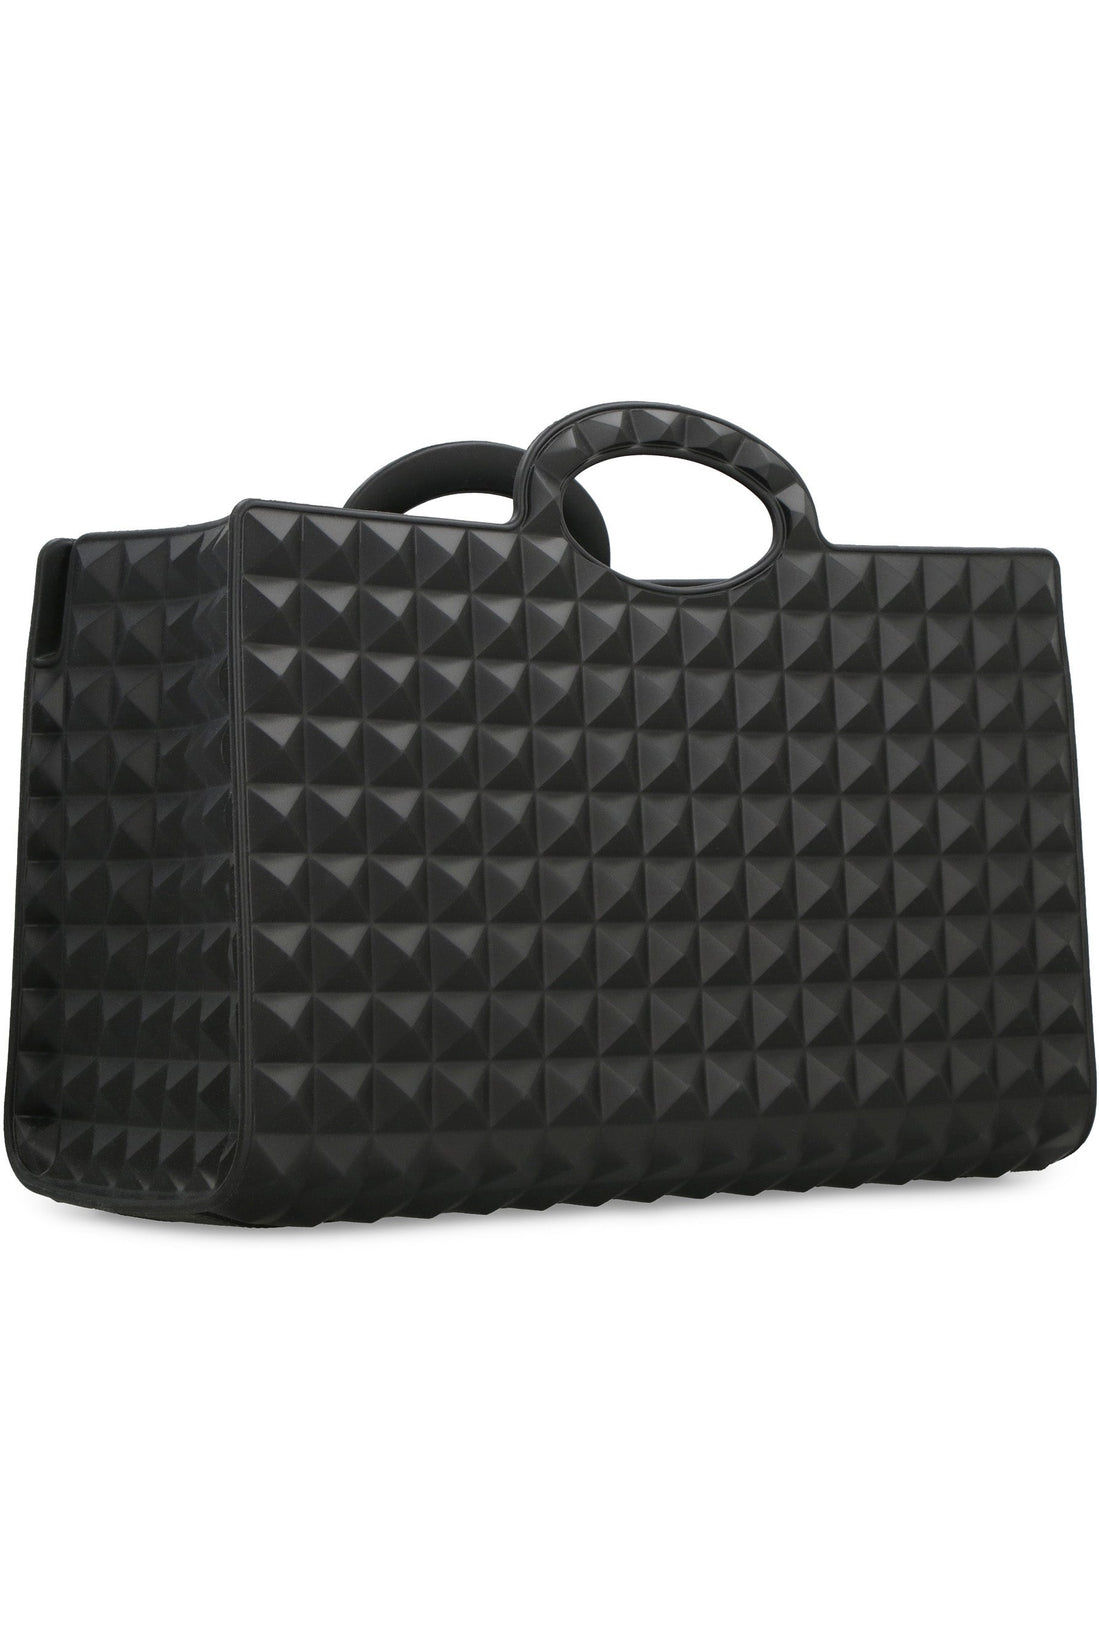 Valentino-OUTLET-SALE-Valentino Garavani - Shopping bag Le Troisieme rubber-ARCHIVIST